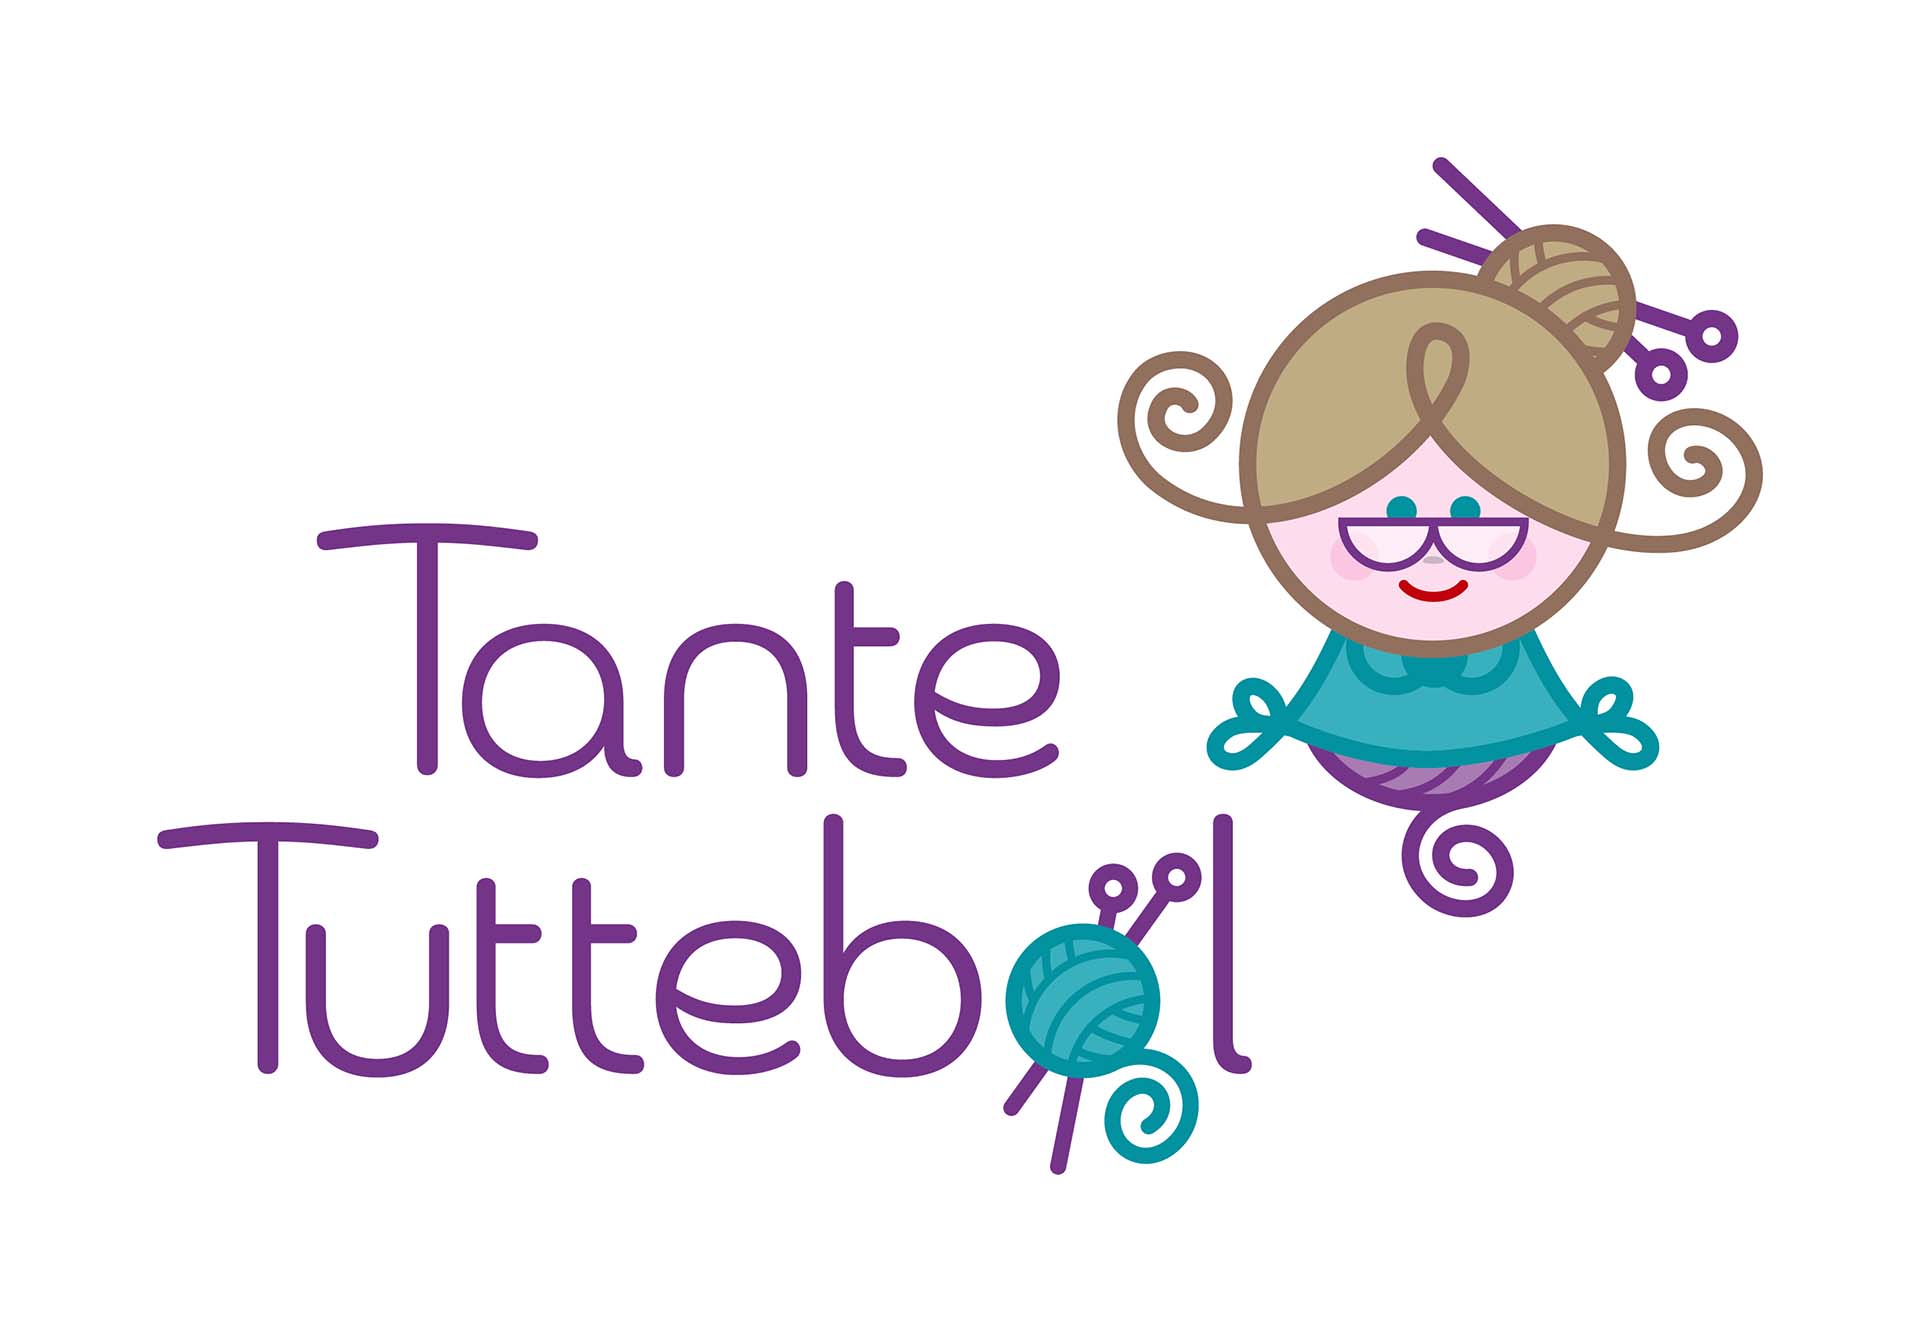 TanteTuttebol-logo1